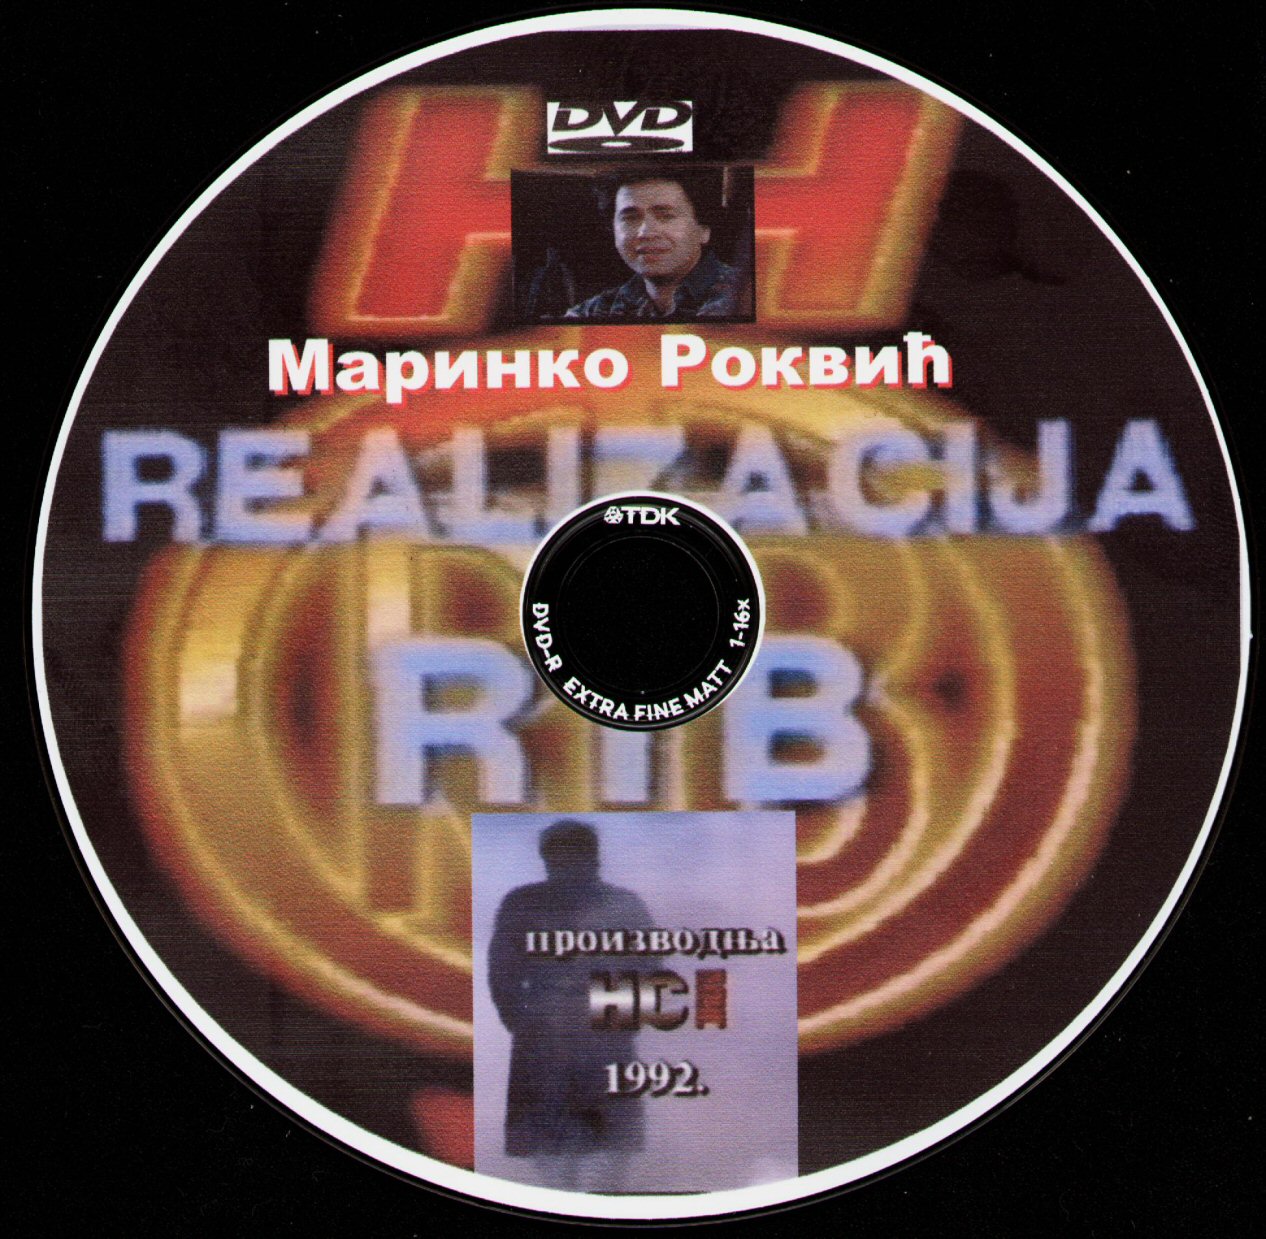 Click to view full size image -  DVD Cover - M - Marinko rokvic - DVD- MARINKO ROKVIC 92 - CD.JPG